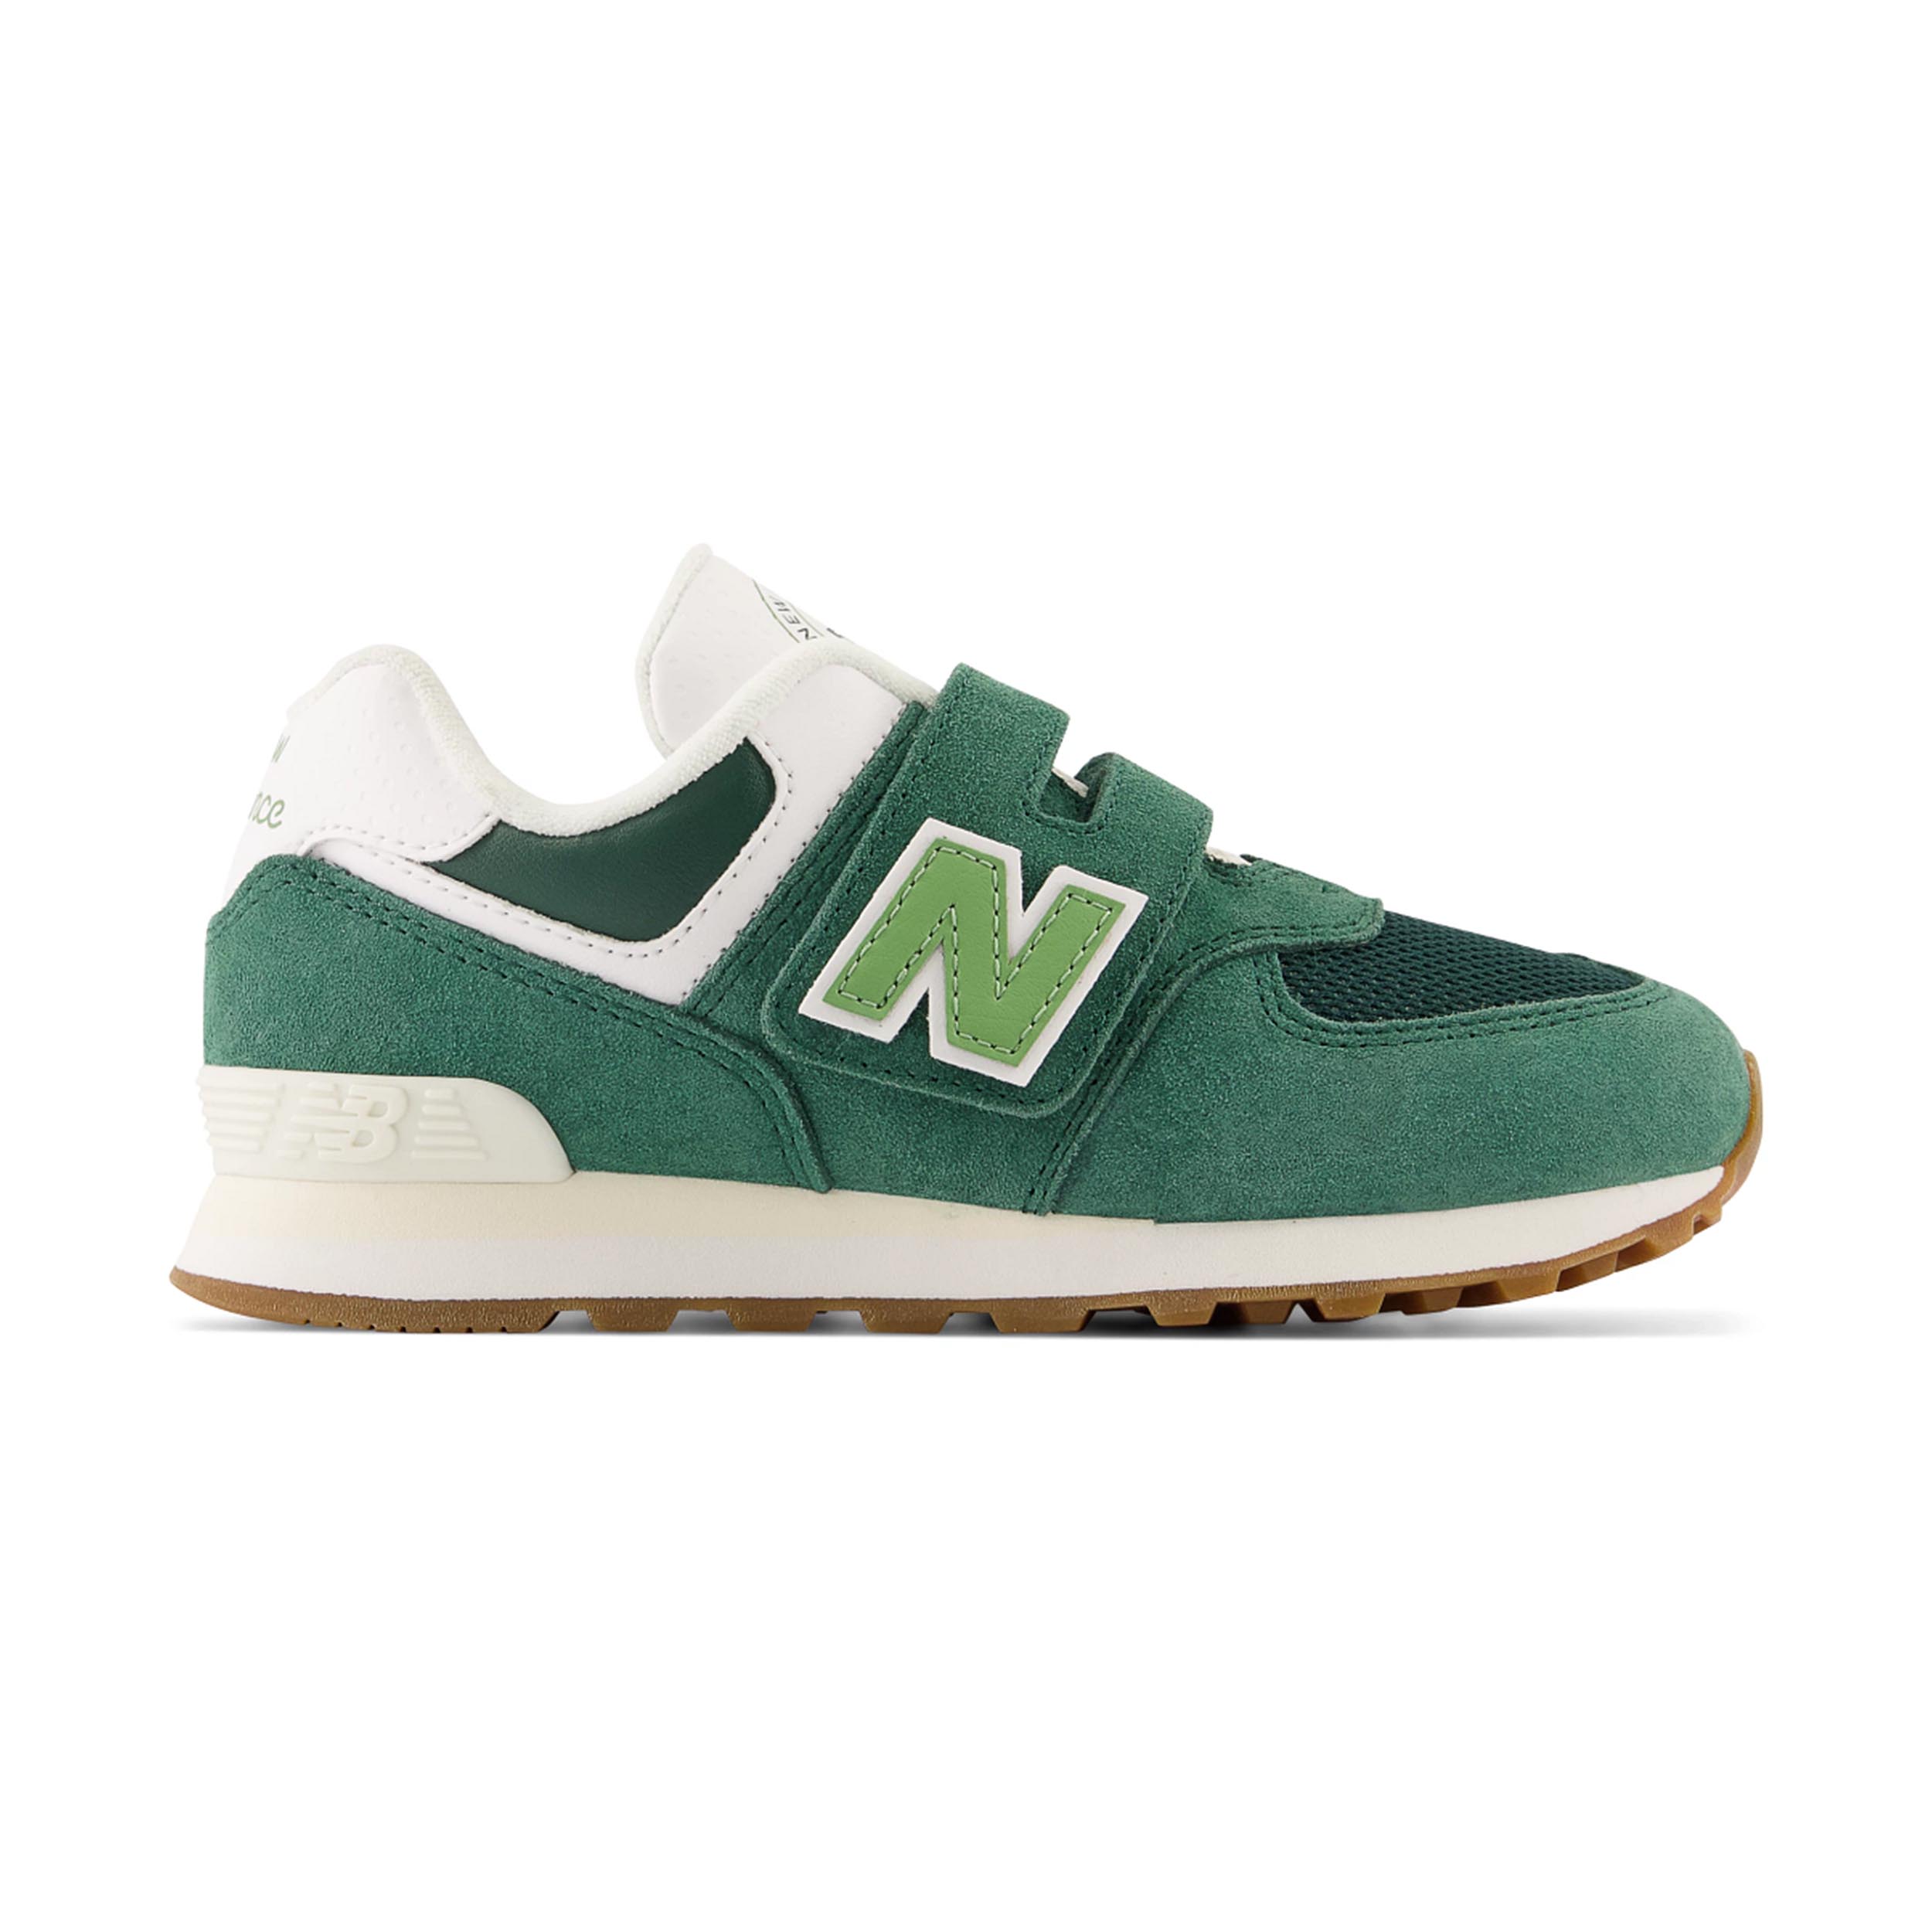 New Balance 574 Sneaker Nightwatch Green Chive